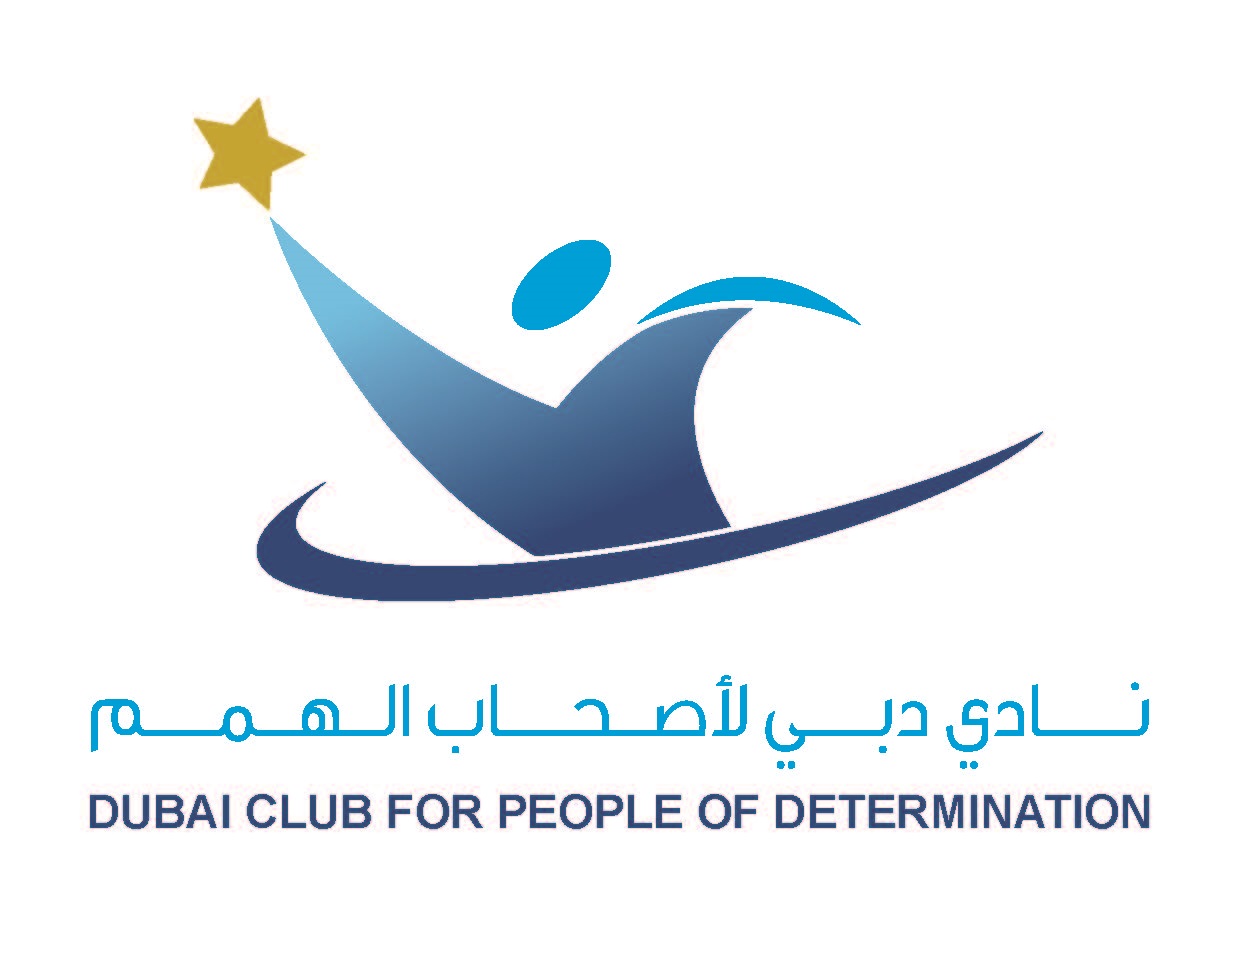 Dubai Club logo